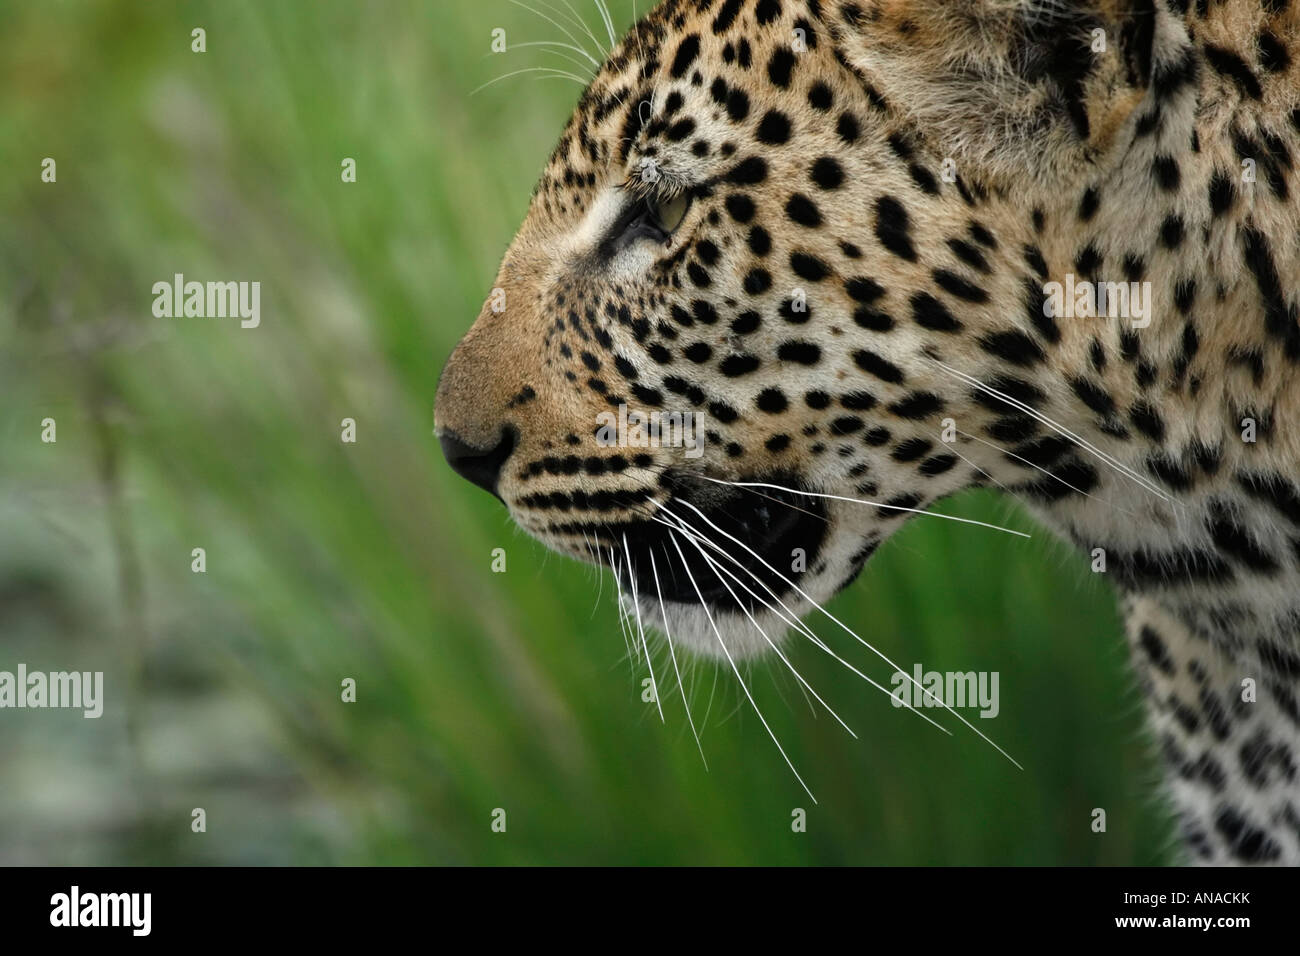 Side view close up of Leopard's face Banque D'Images